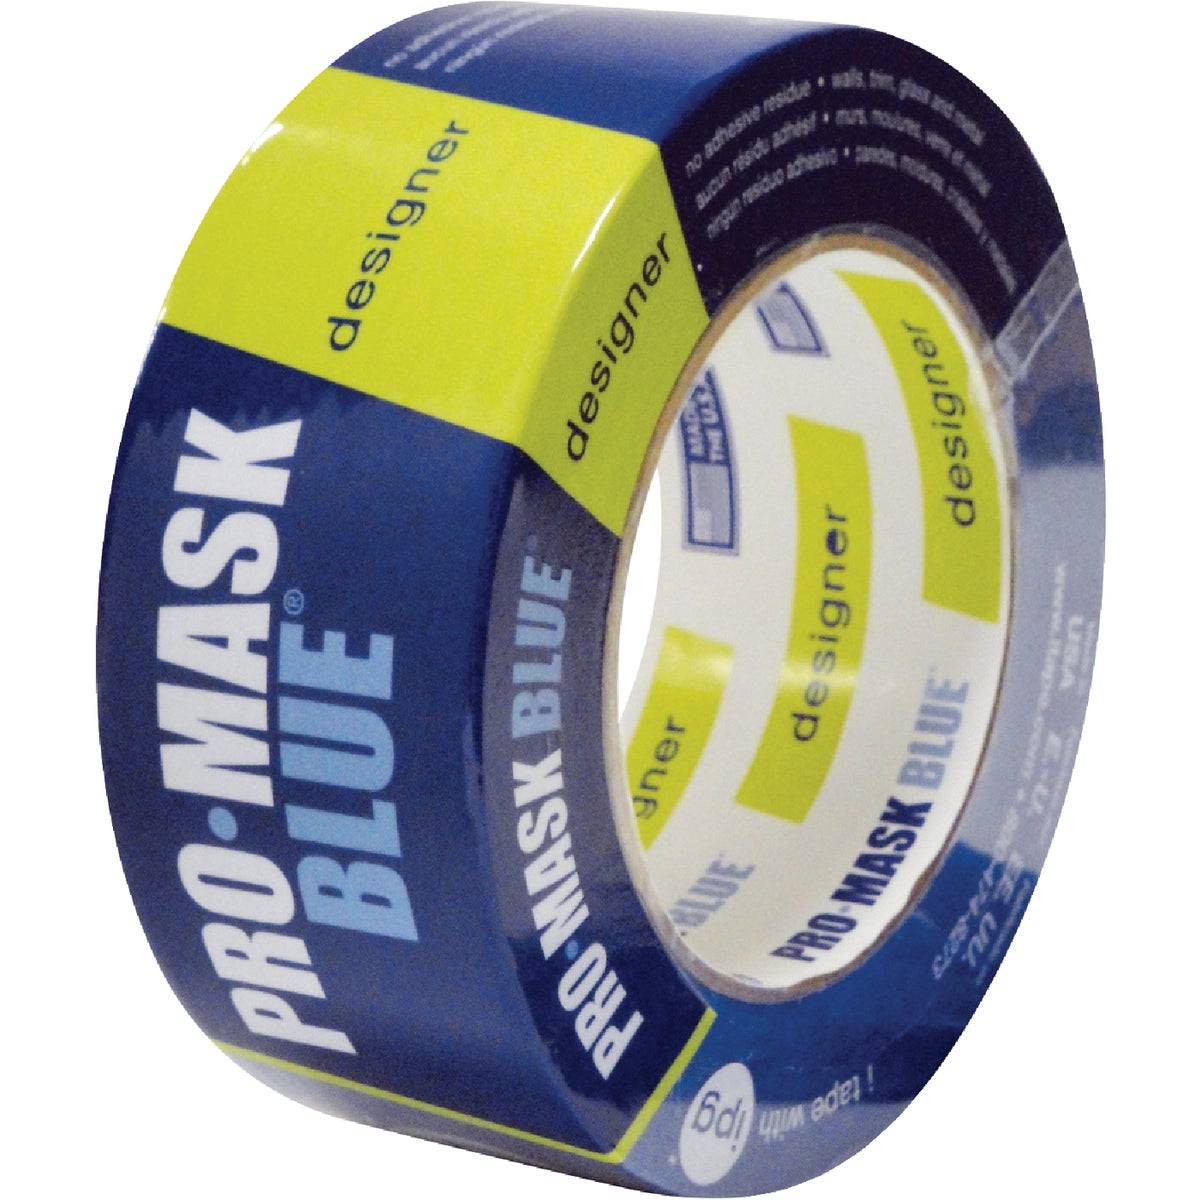 IPG ProMask Blue 1.88 In. x 60 Yd. Designer Masking Tape